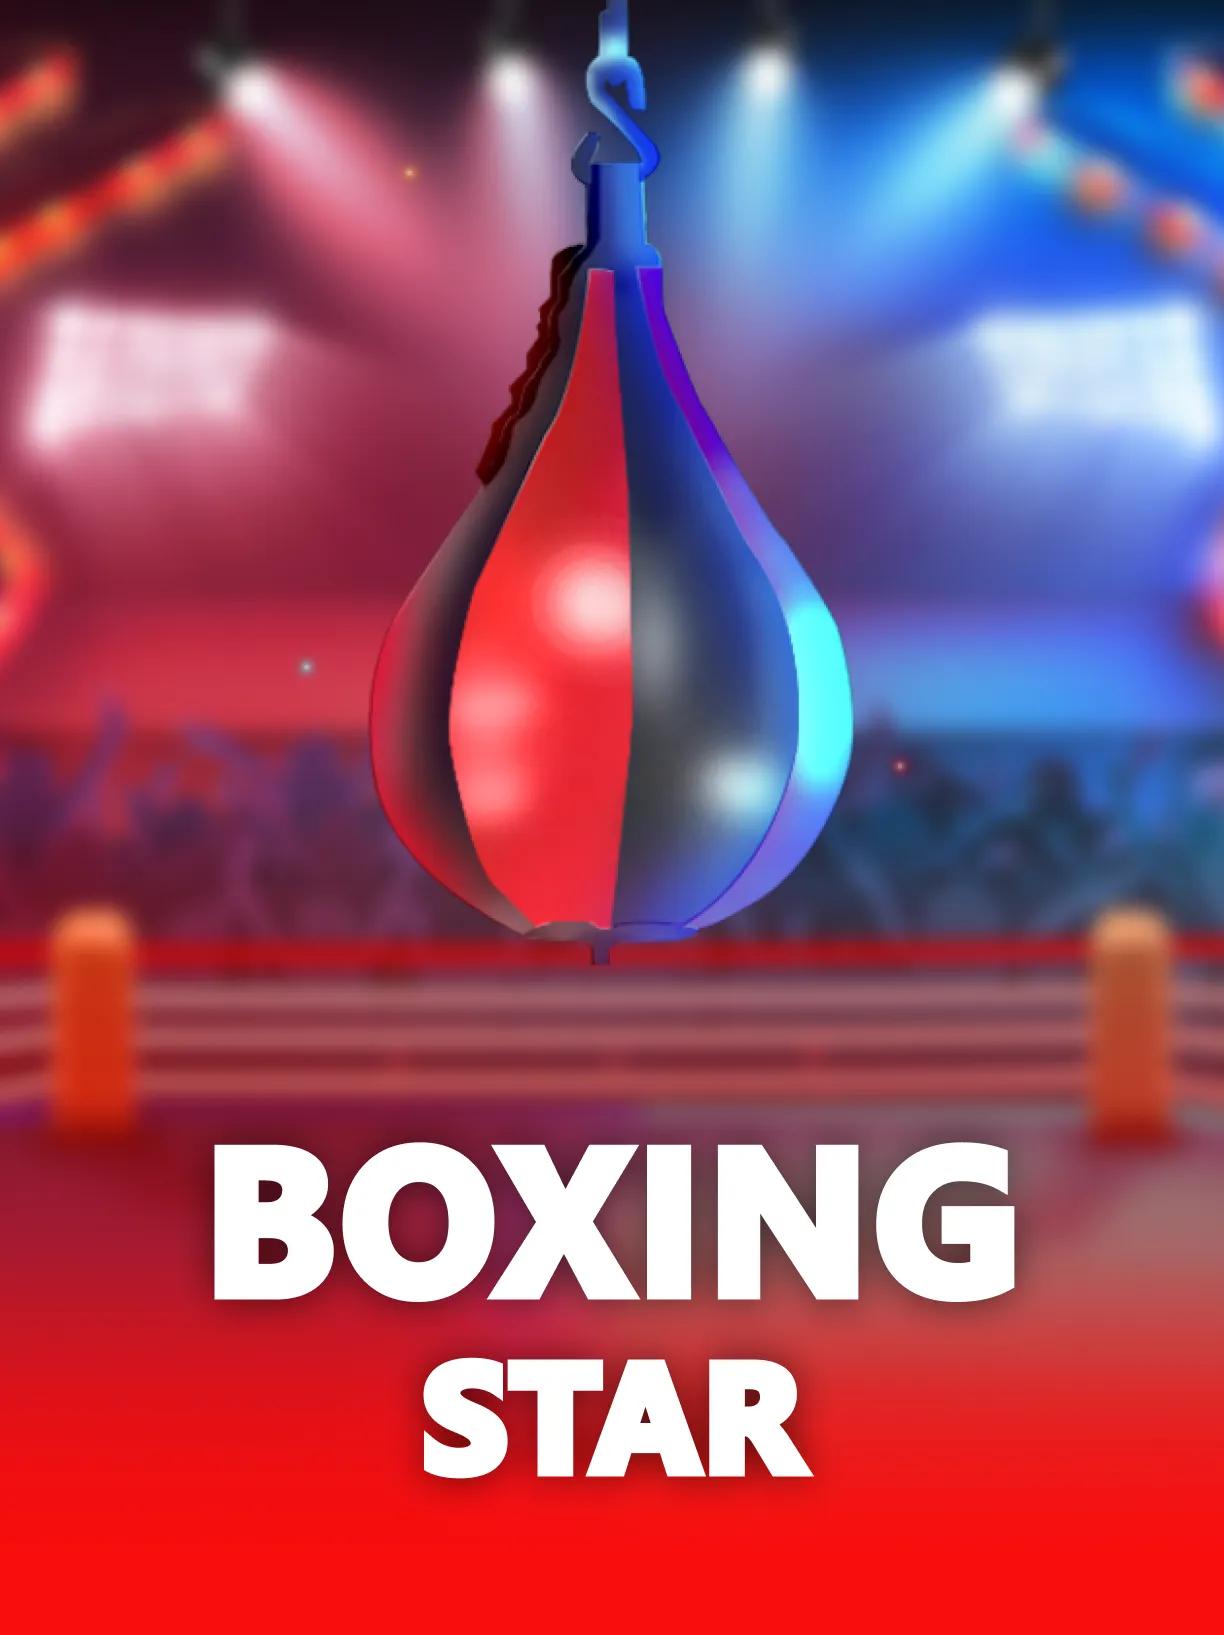 ug_Boxing_Star_square.webp